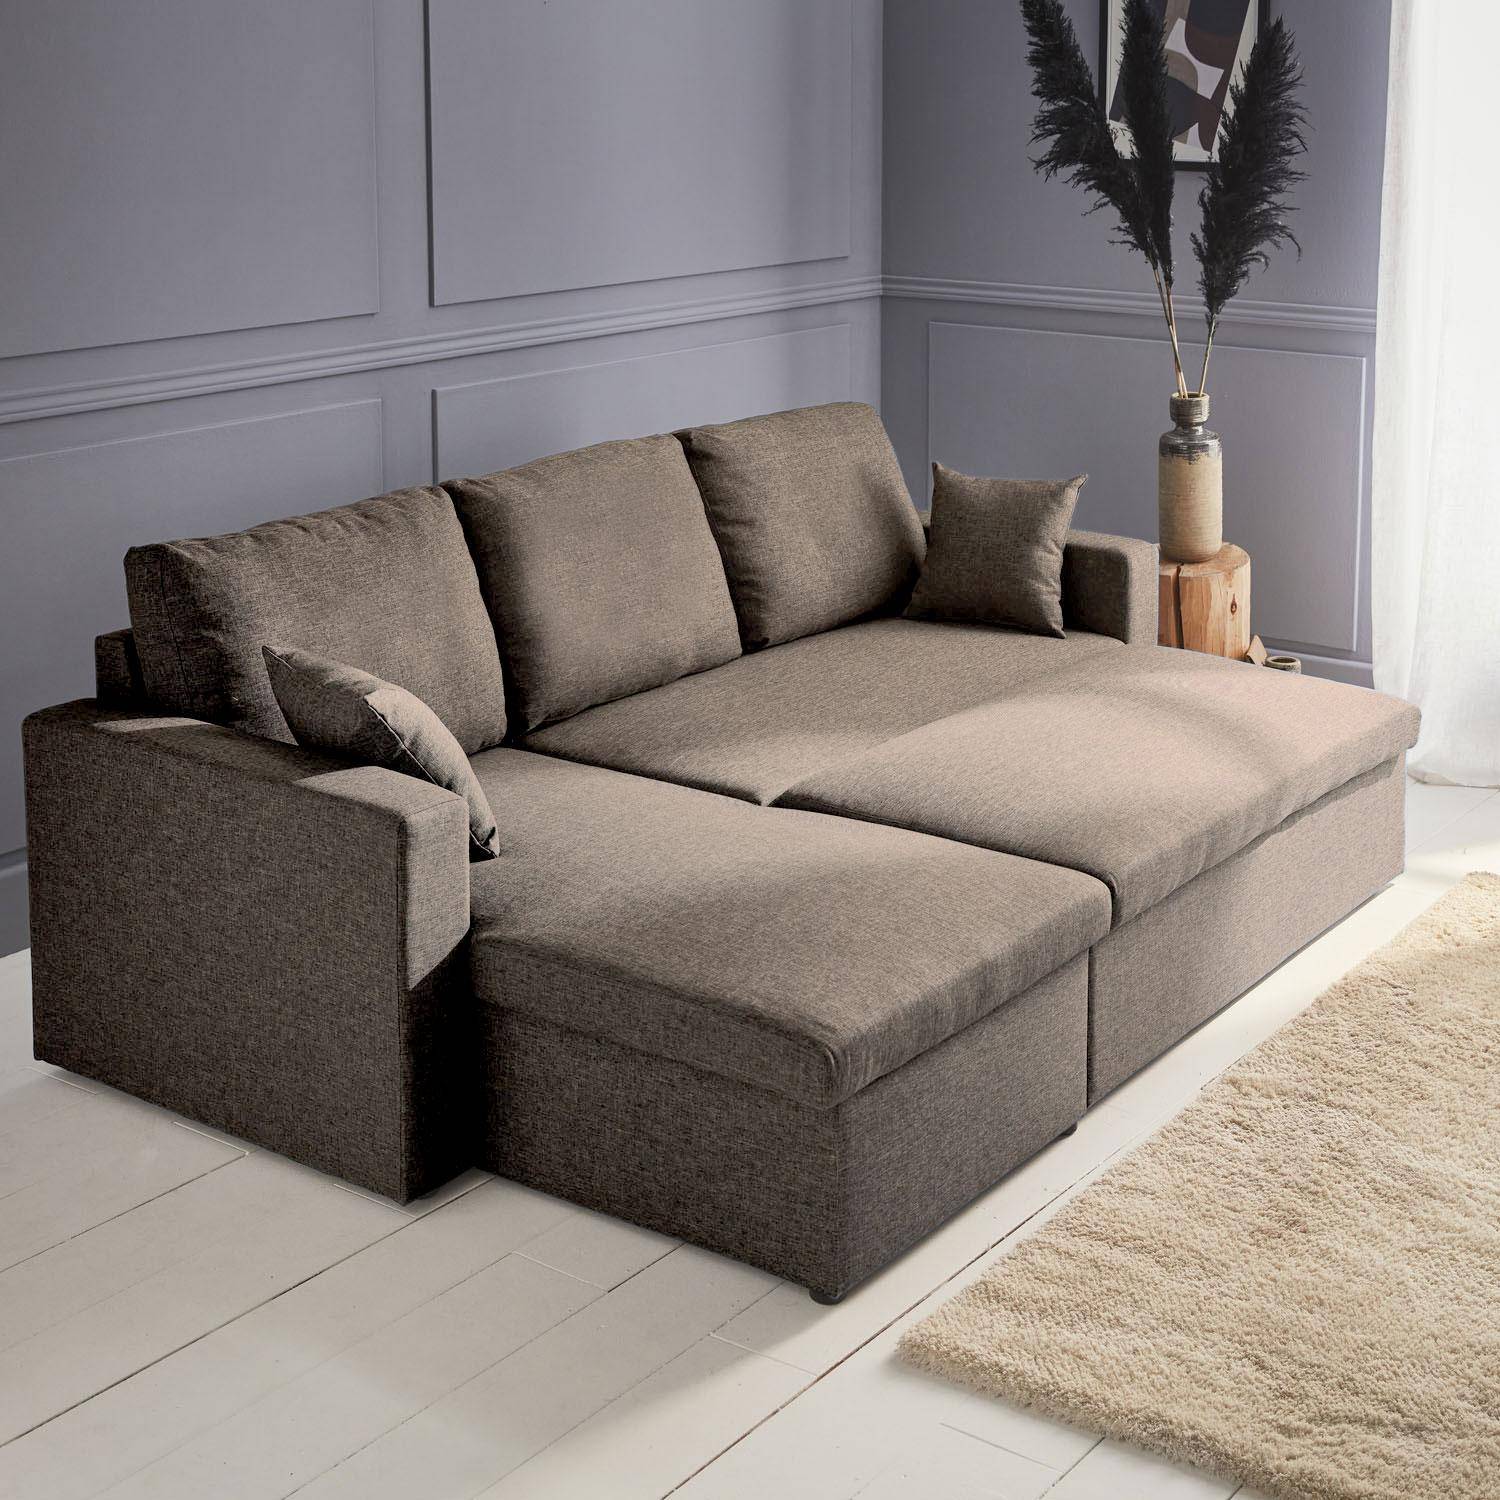 3-seater reversible brown corner sofa bed with storage box, brown, L219xD81xH68cm, IDA Photo2